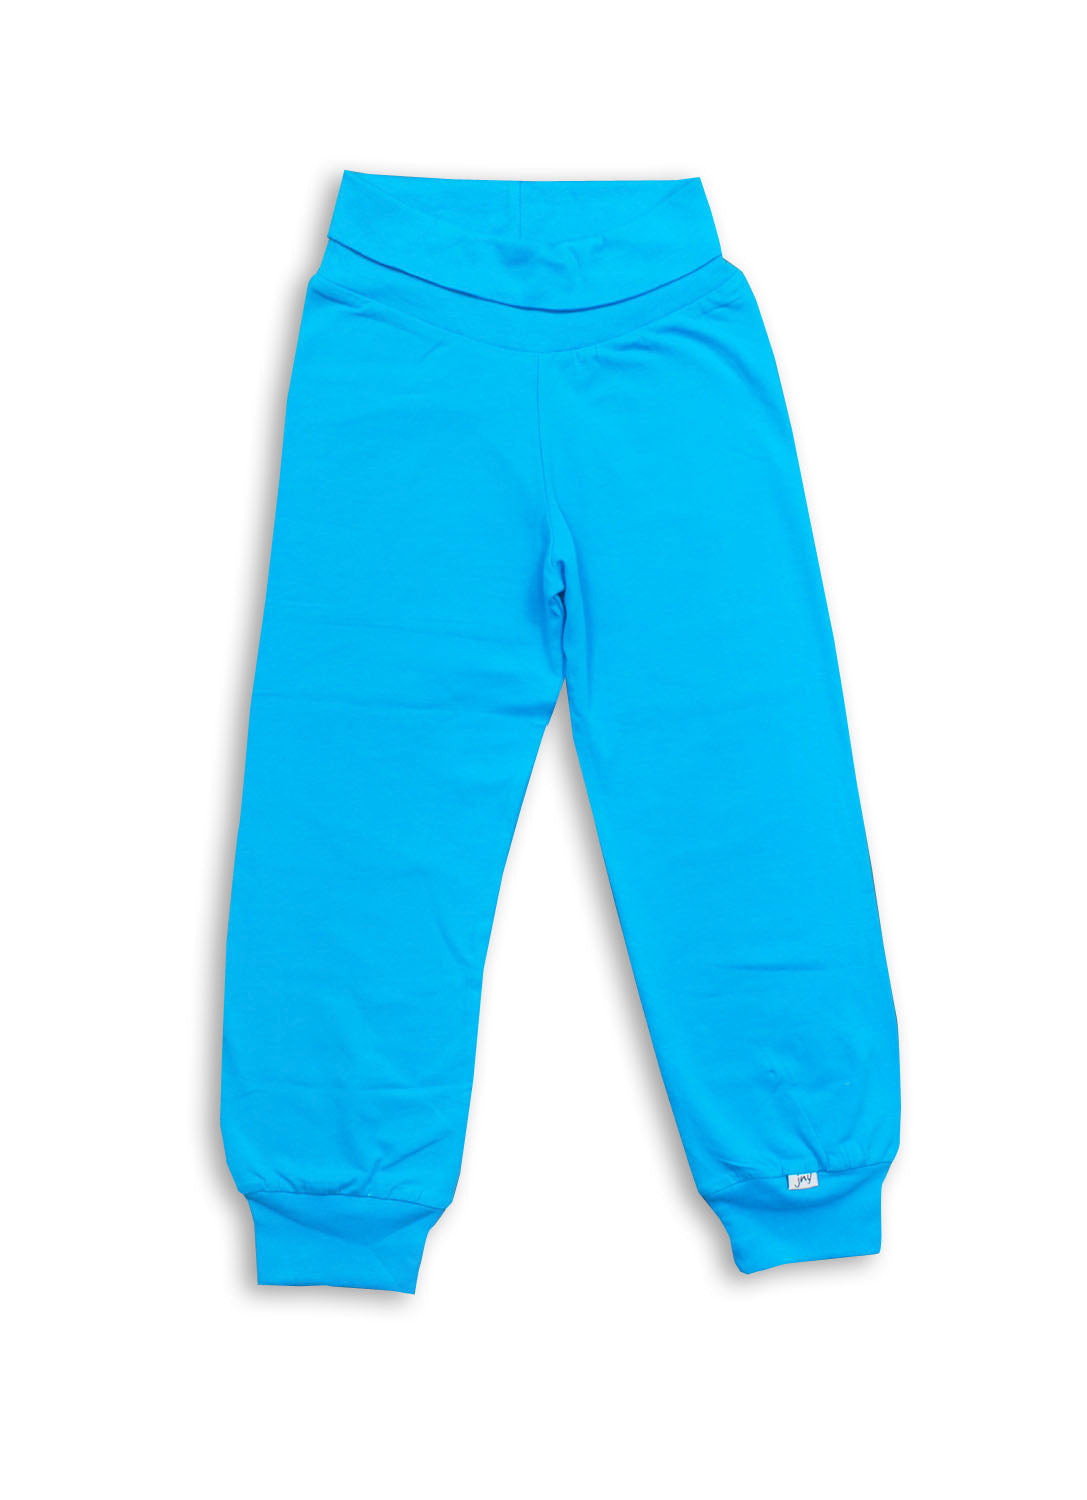 JNY - Basics - Comfy Pants - Turquoise (new style)